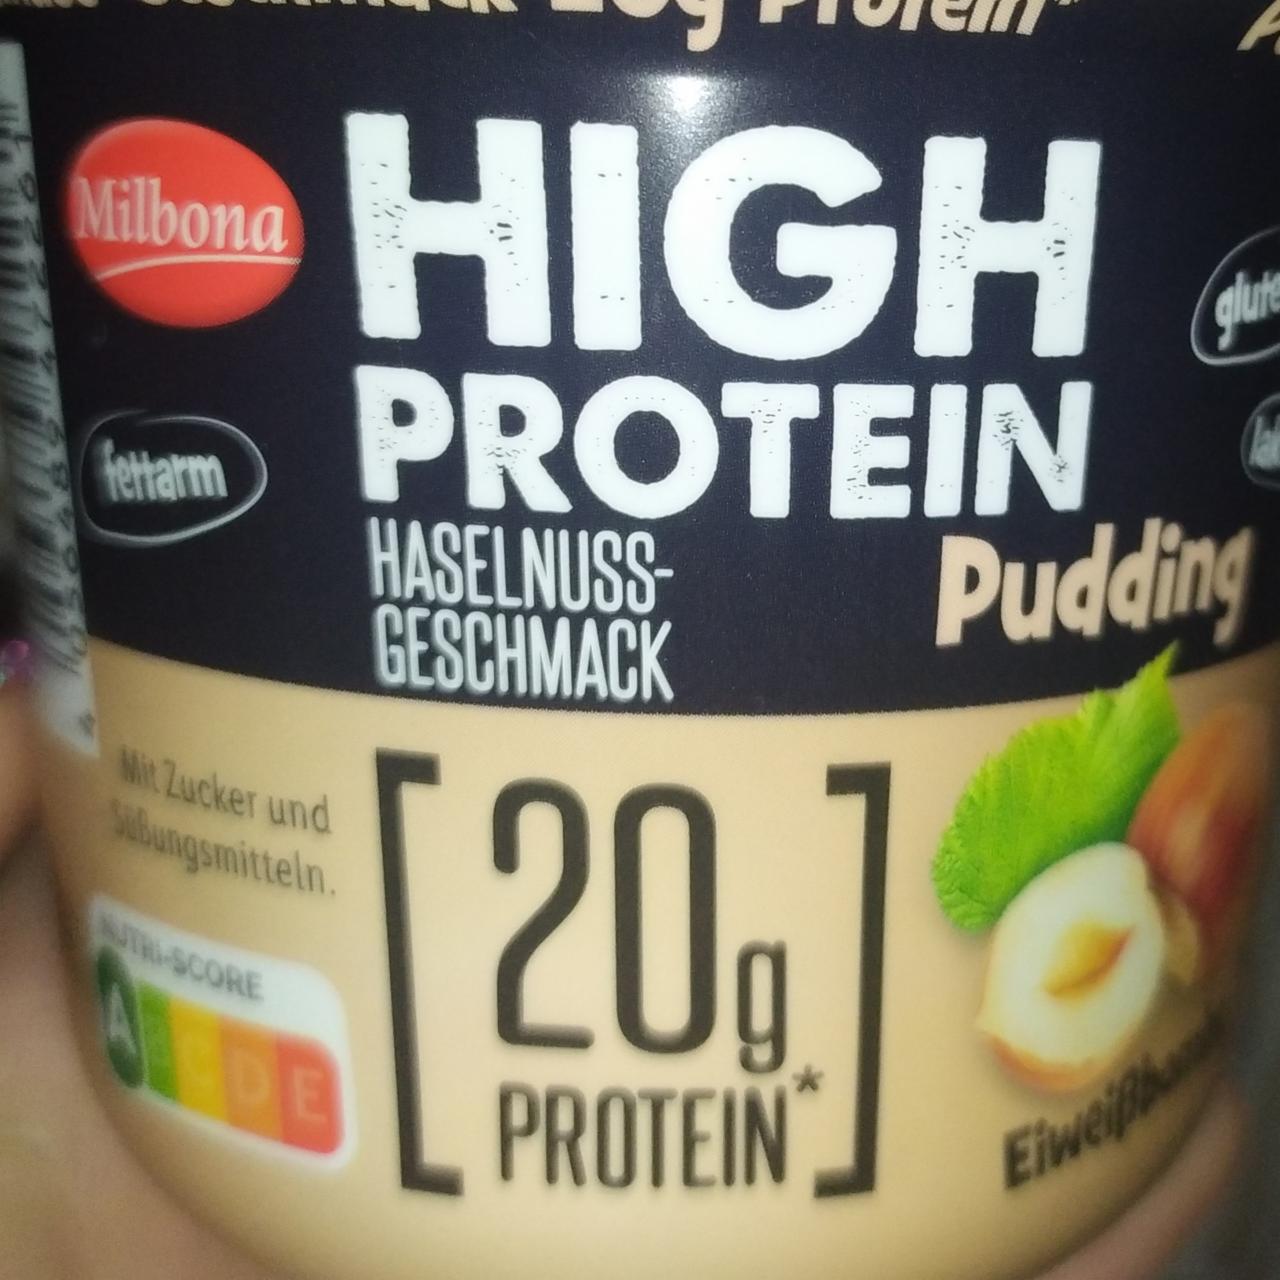 Zdjęcia - High Protein pudding Haselnussgeschmack Milbona